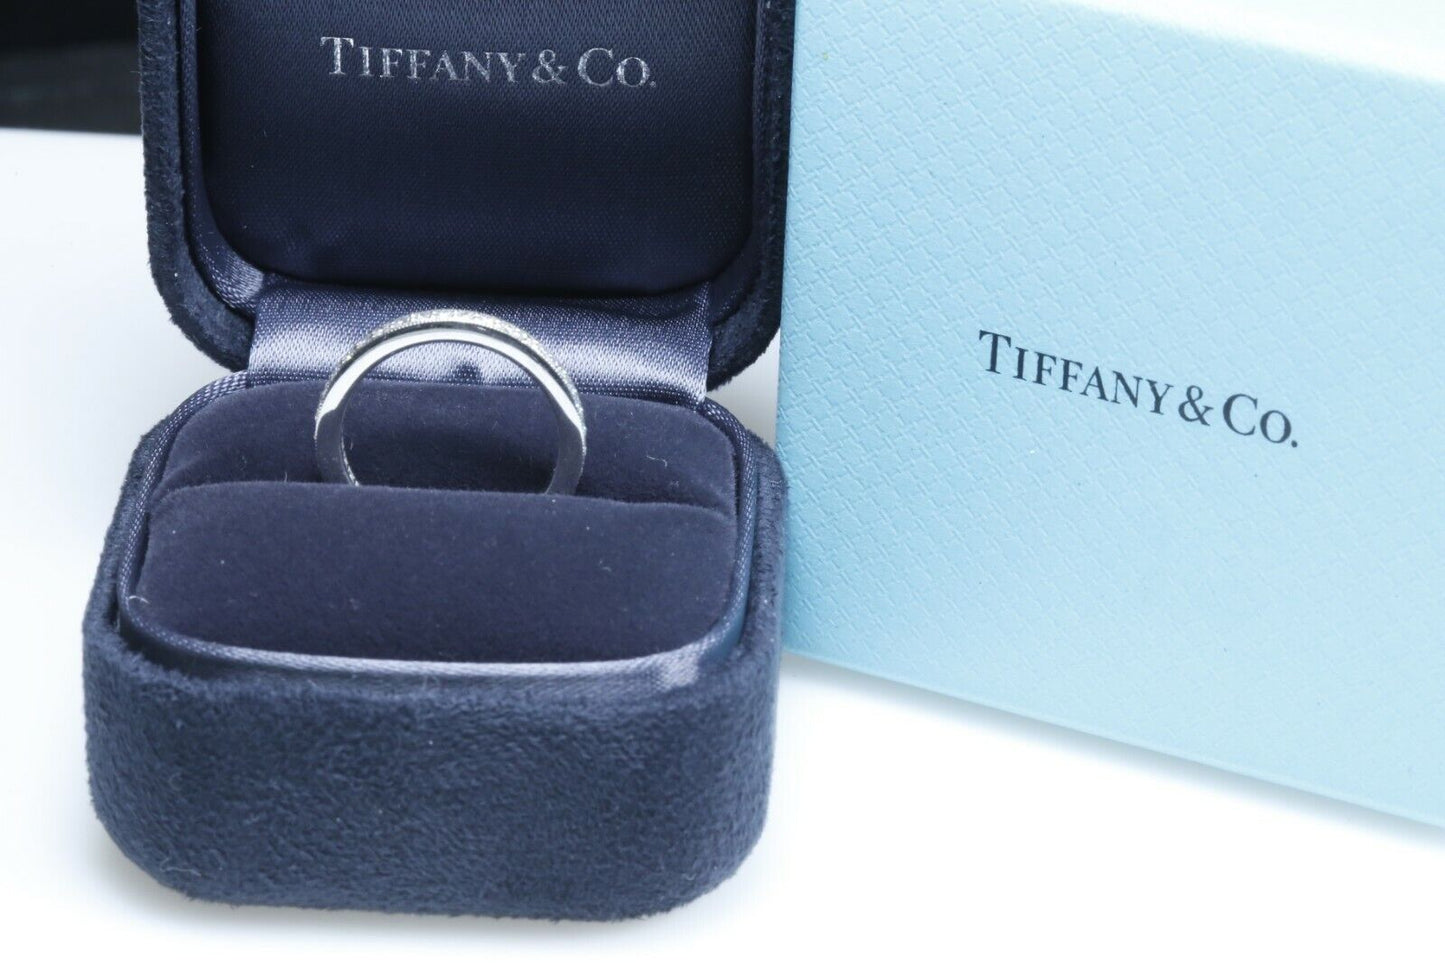 Tiffany & Co. Diamond Eternity Band Ring Platinum .41 Carat Size 5.25